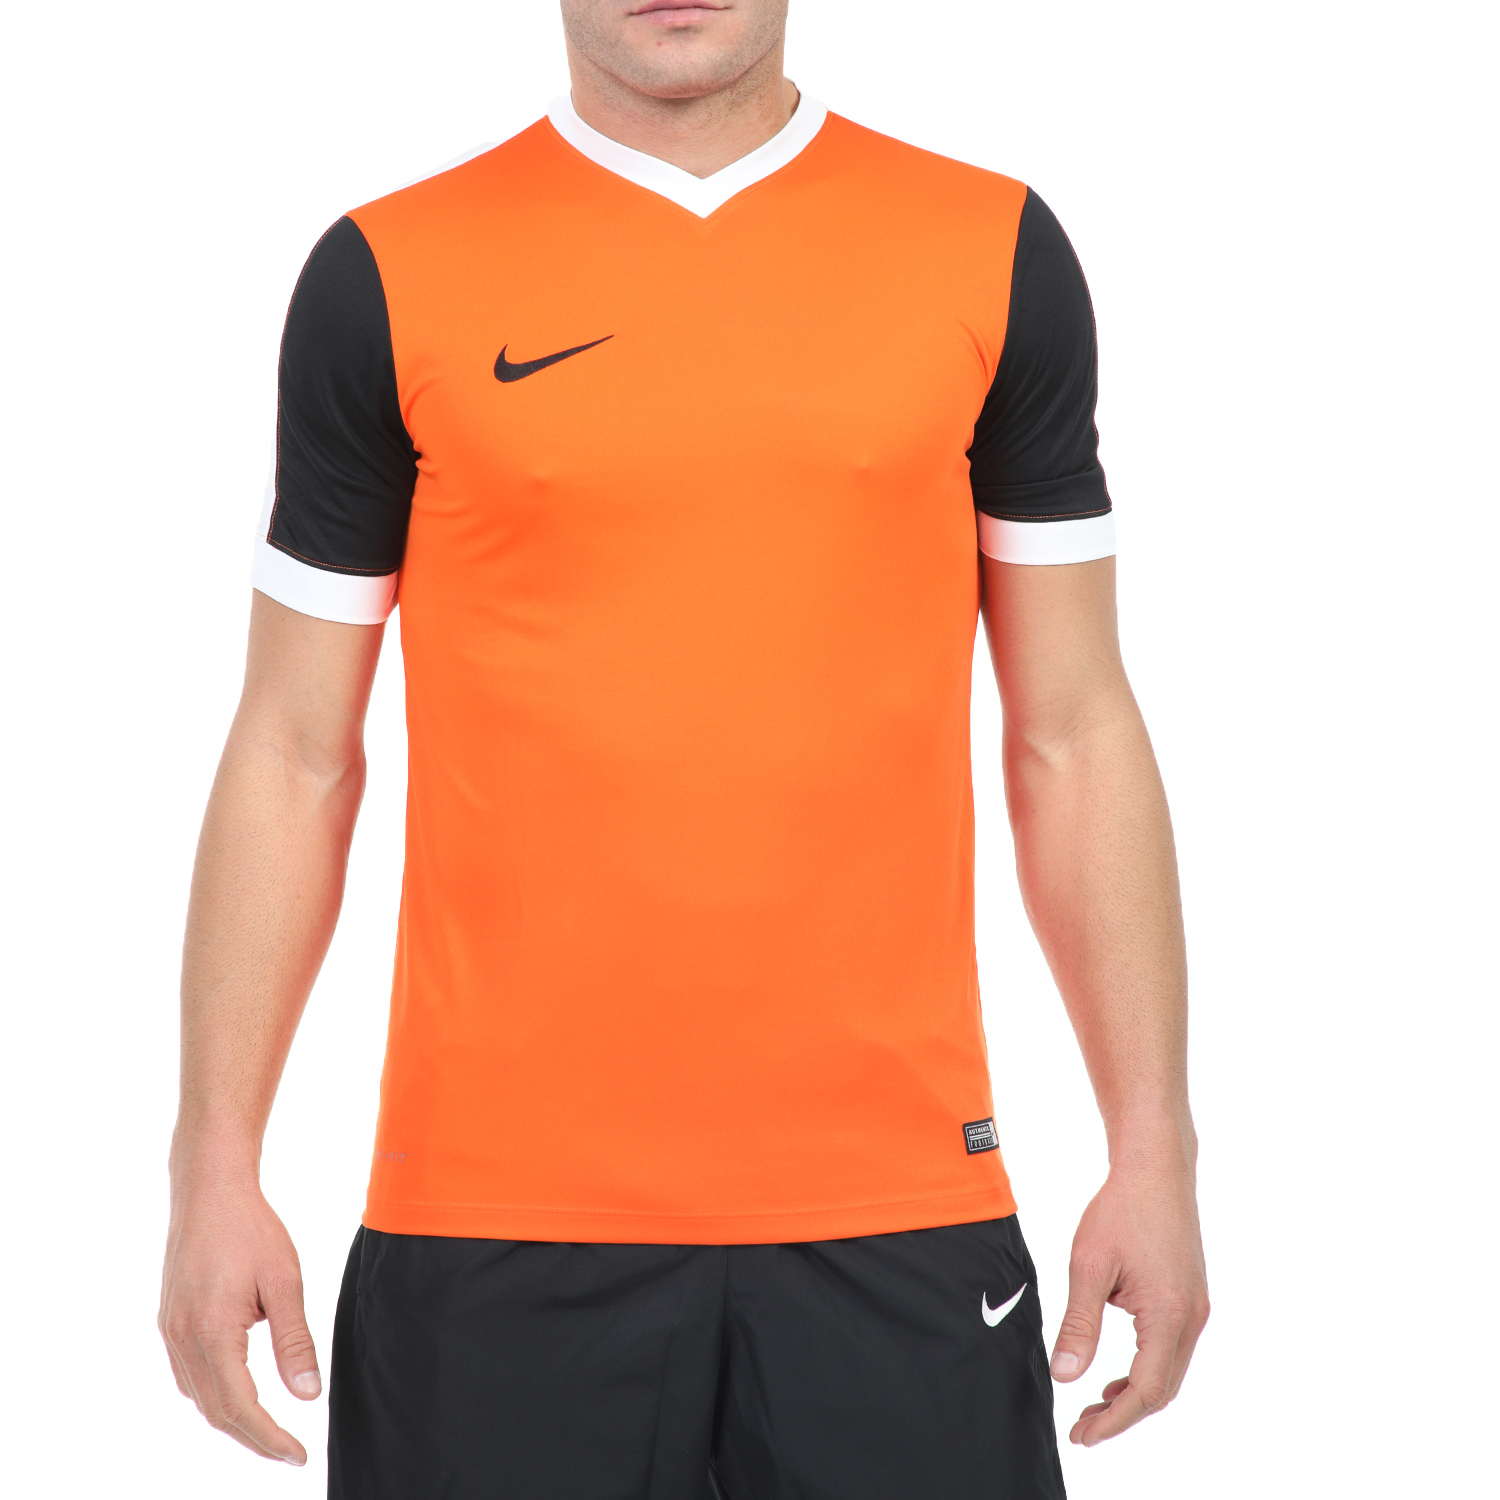 NIKE Ανδρικό αθλητικό t-shirt NIKE STRIKER IV JSY πορτοκαλί